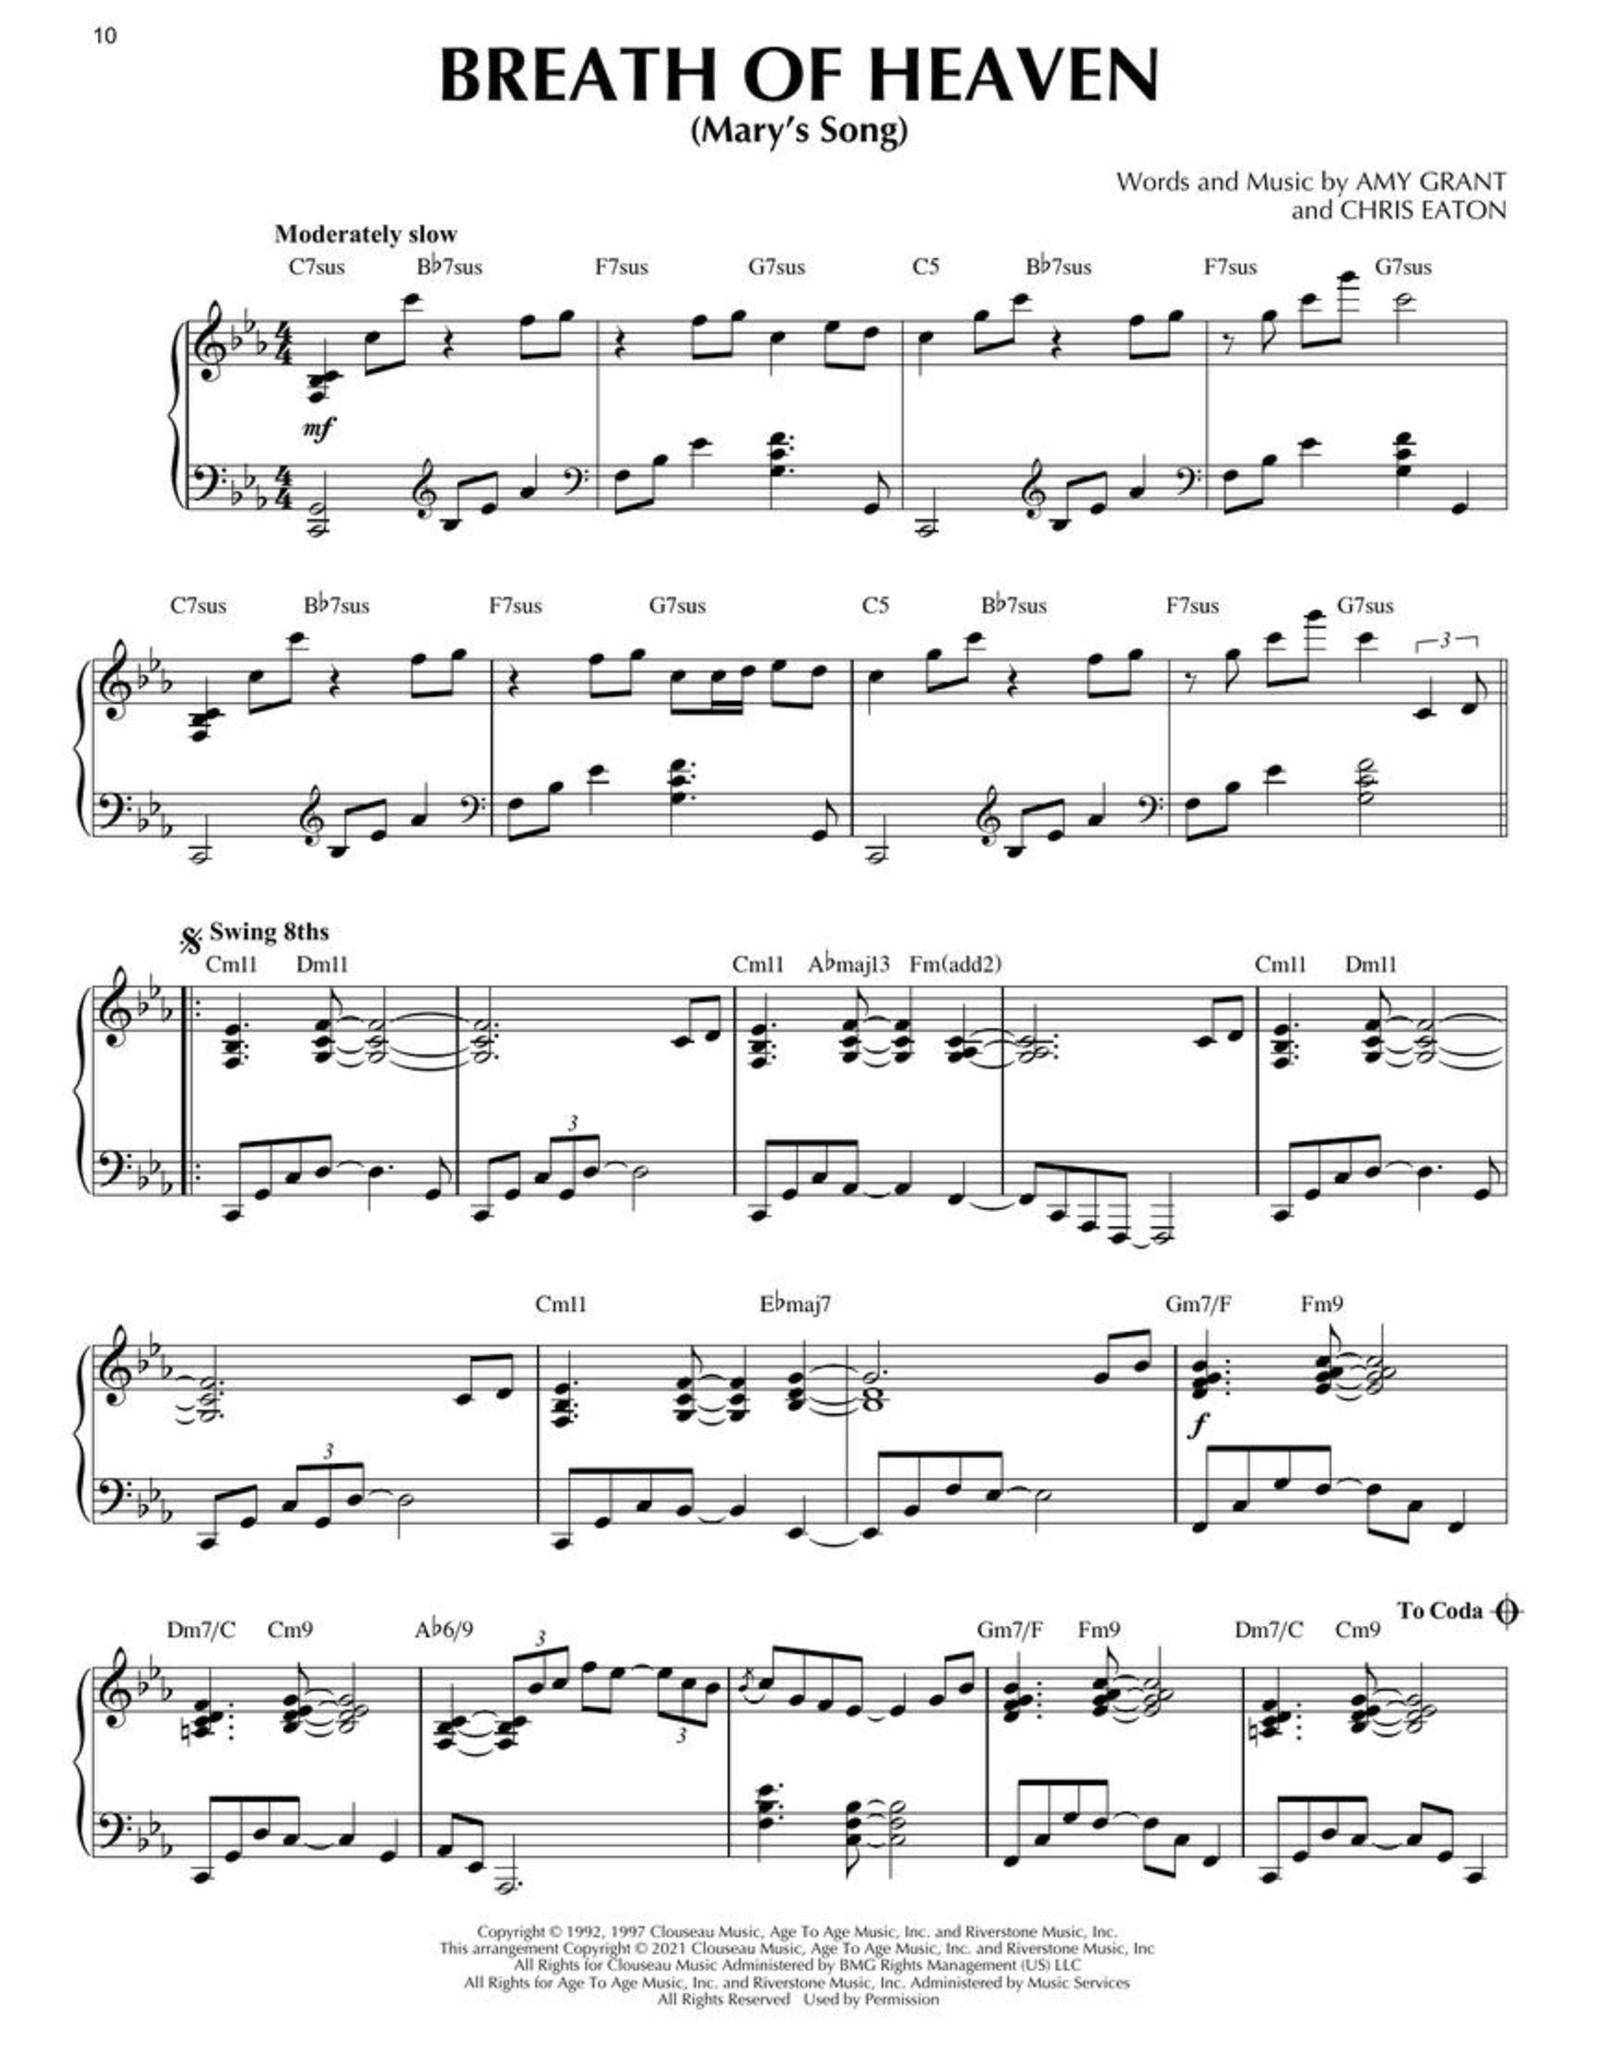 Hal Leonard Christmas Classics - Jazz Piano Solos